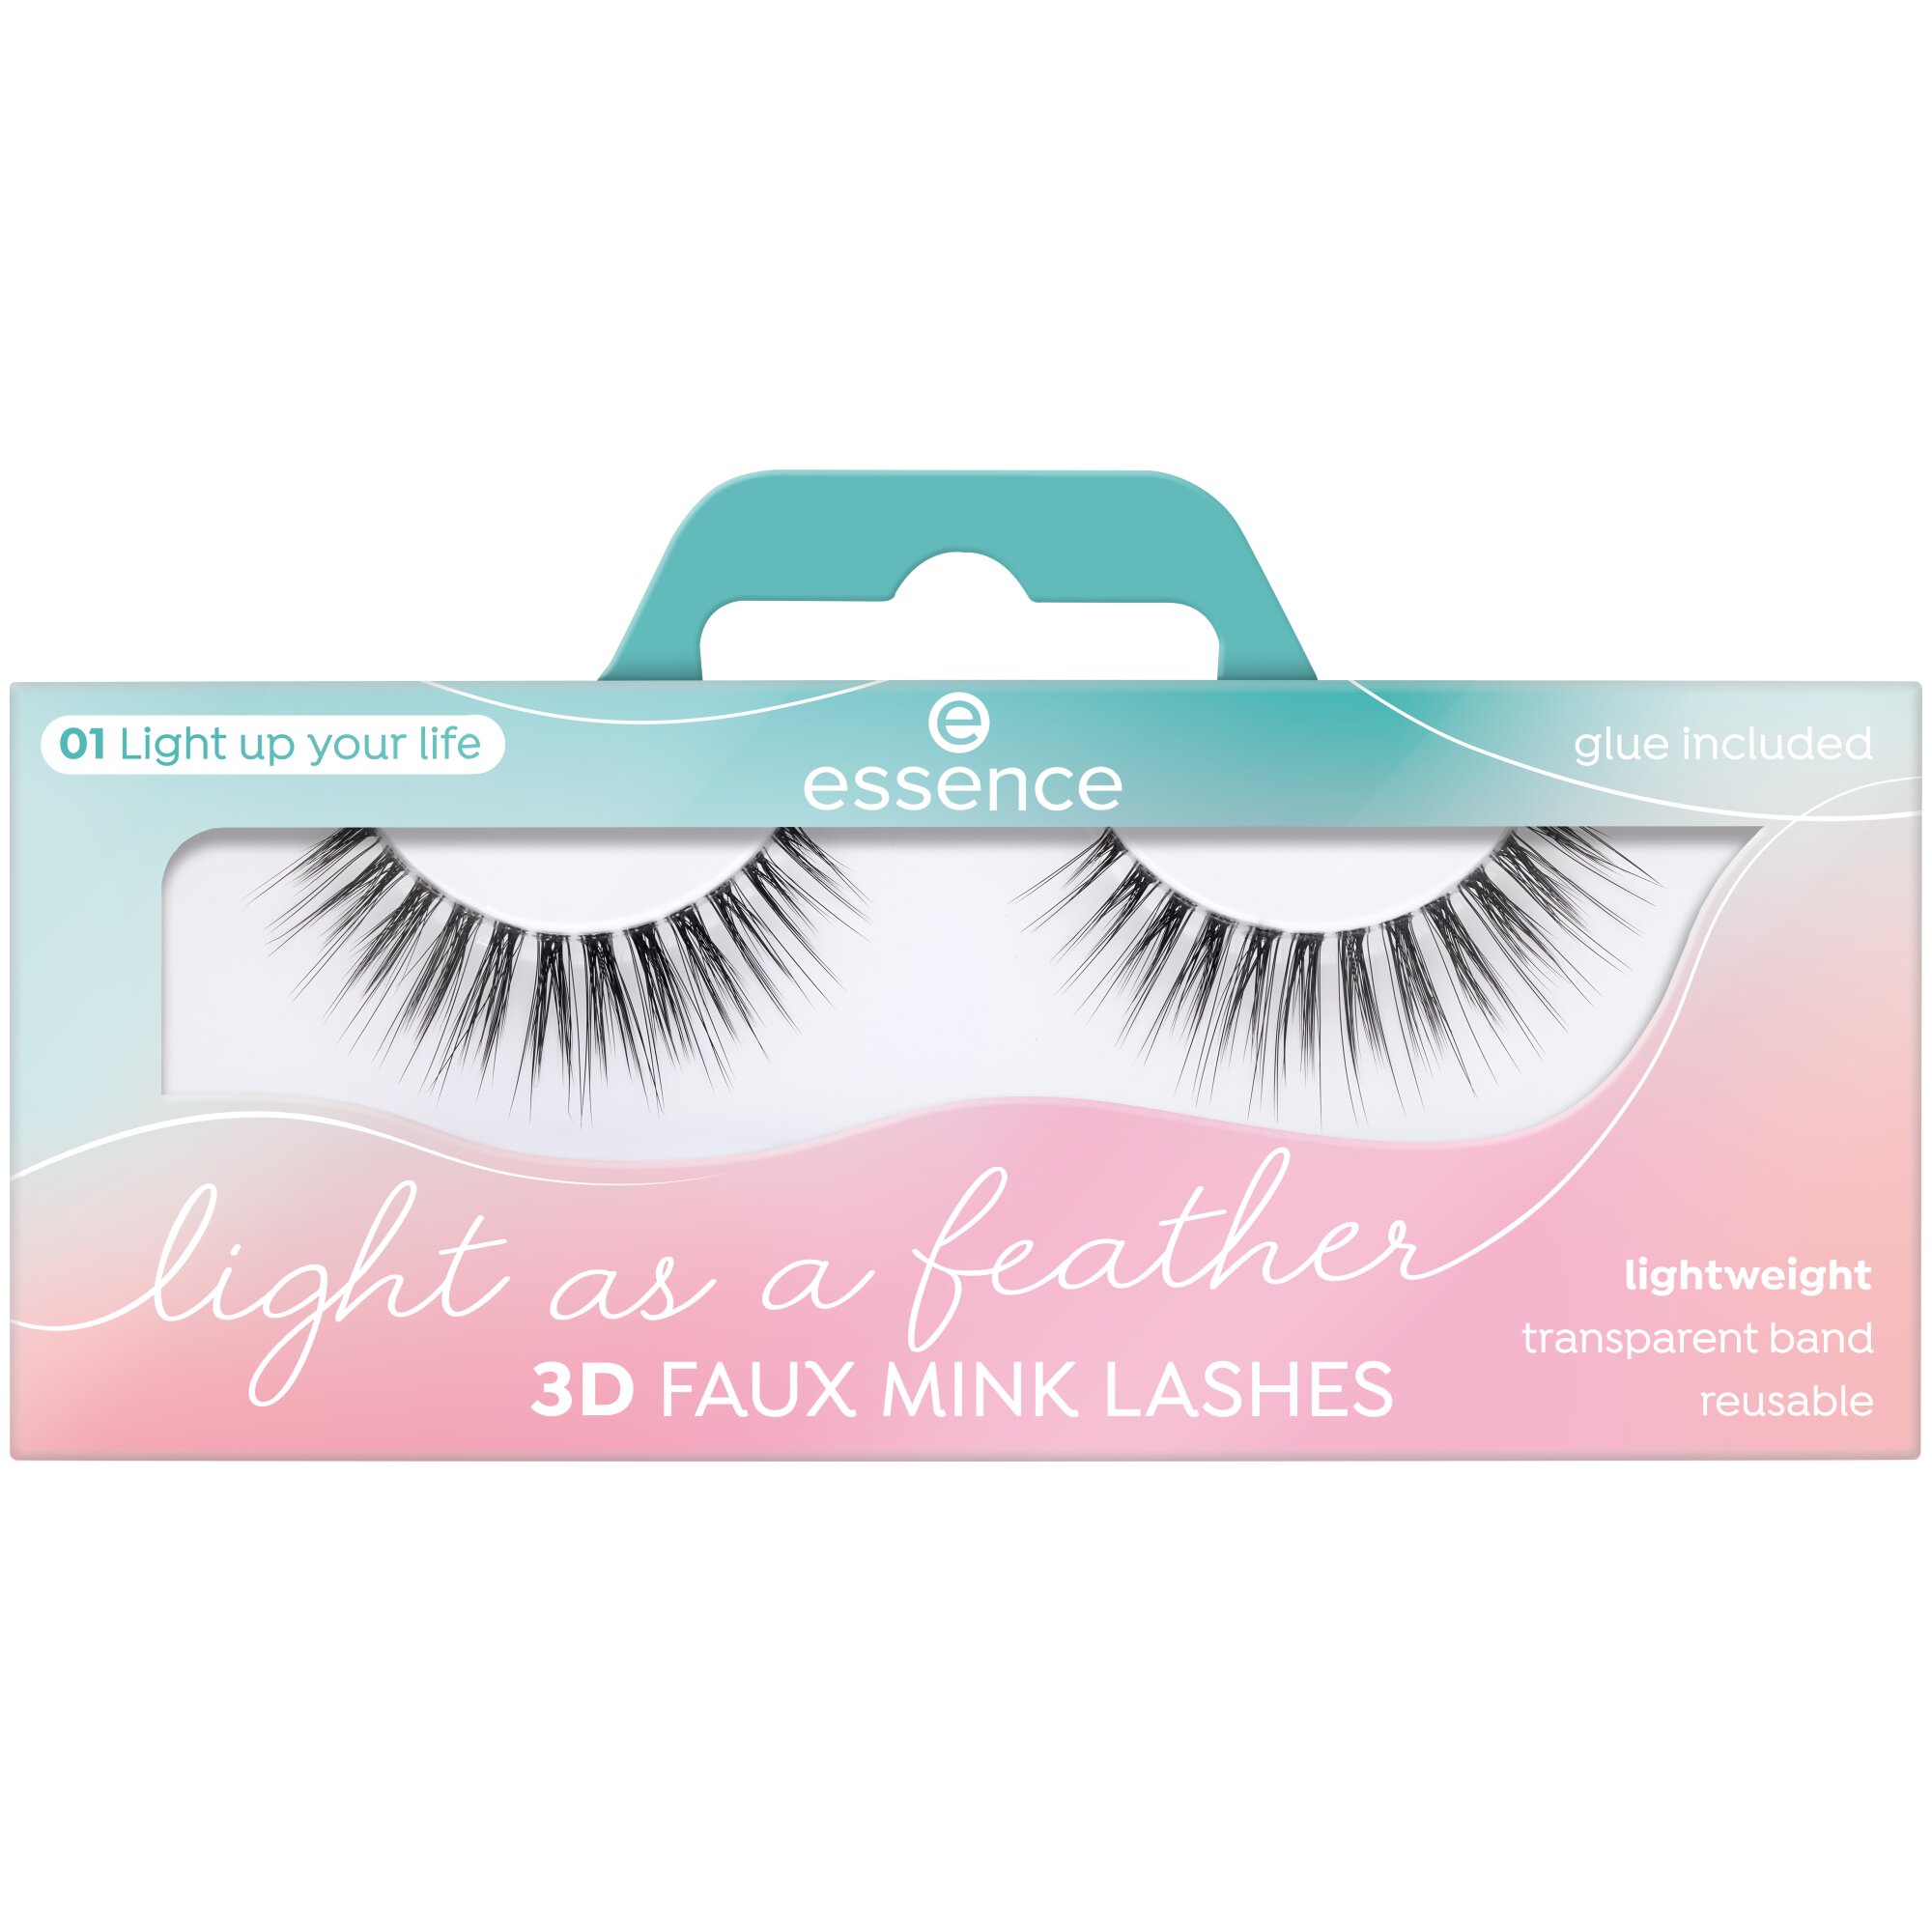 Gene false lase Light as a feather 3D faux mink lashes, 01 - Light up your life, 1 pereche, Essence